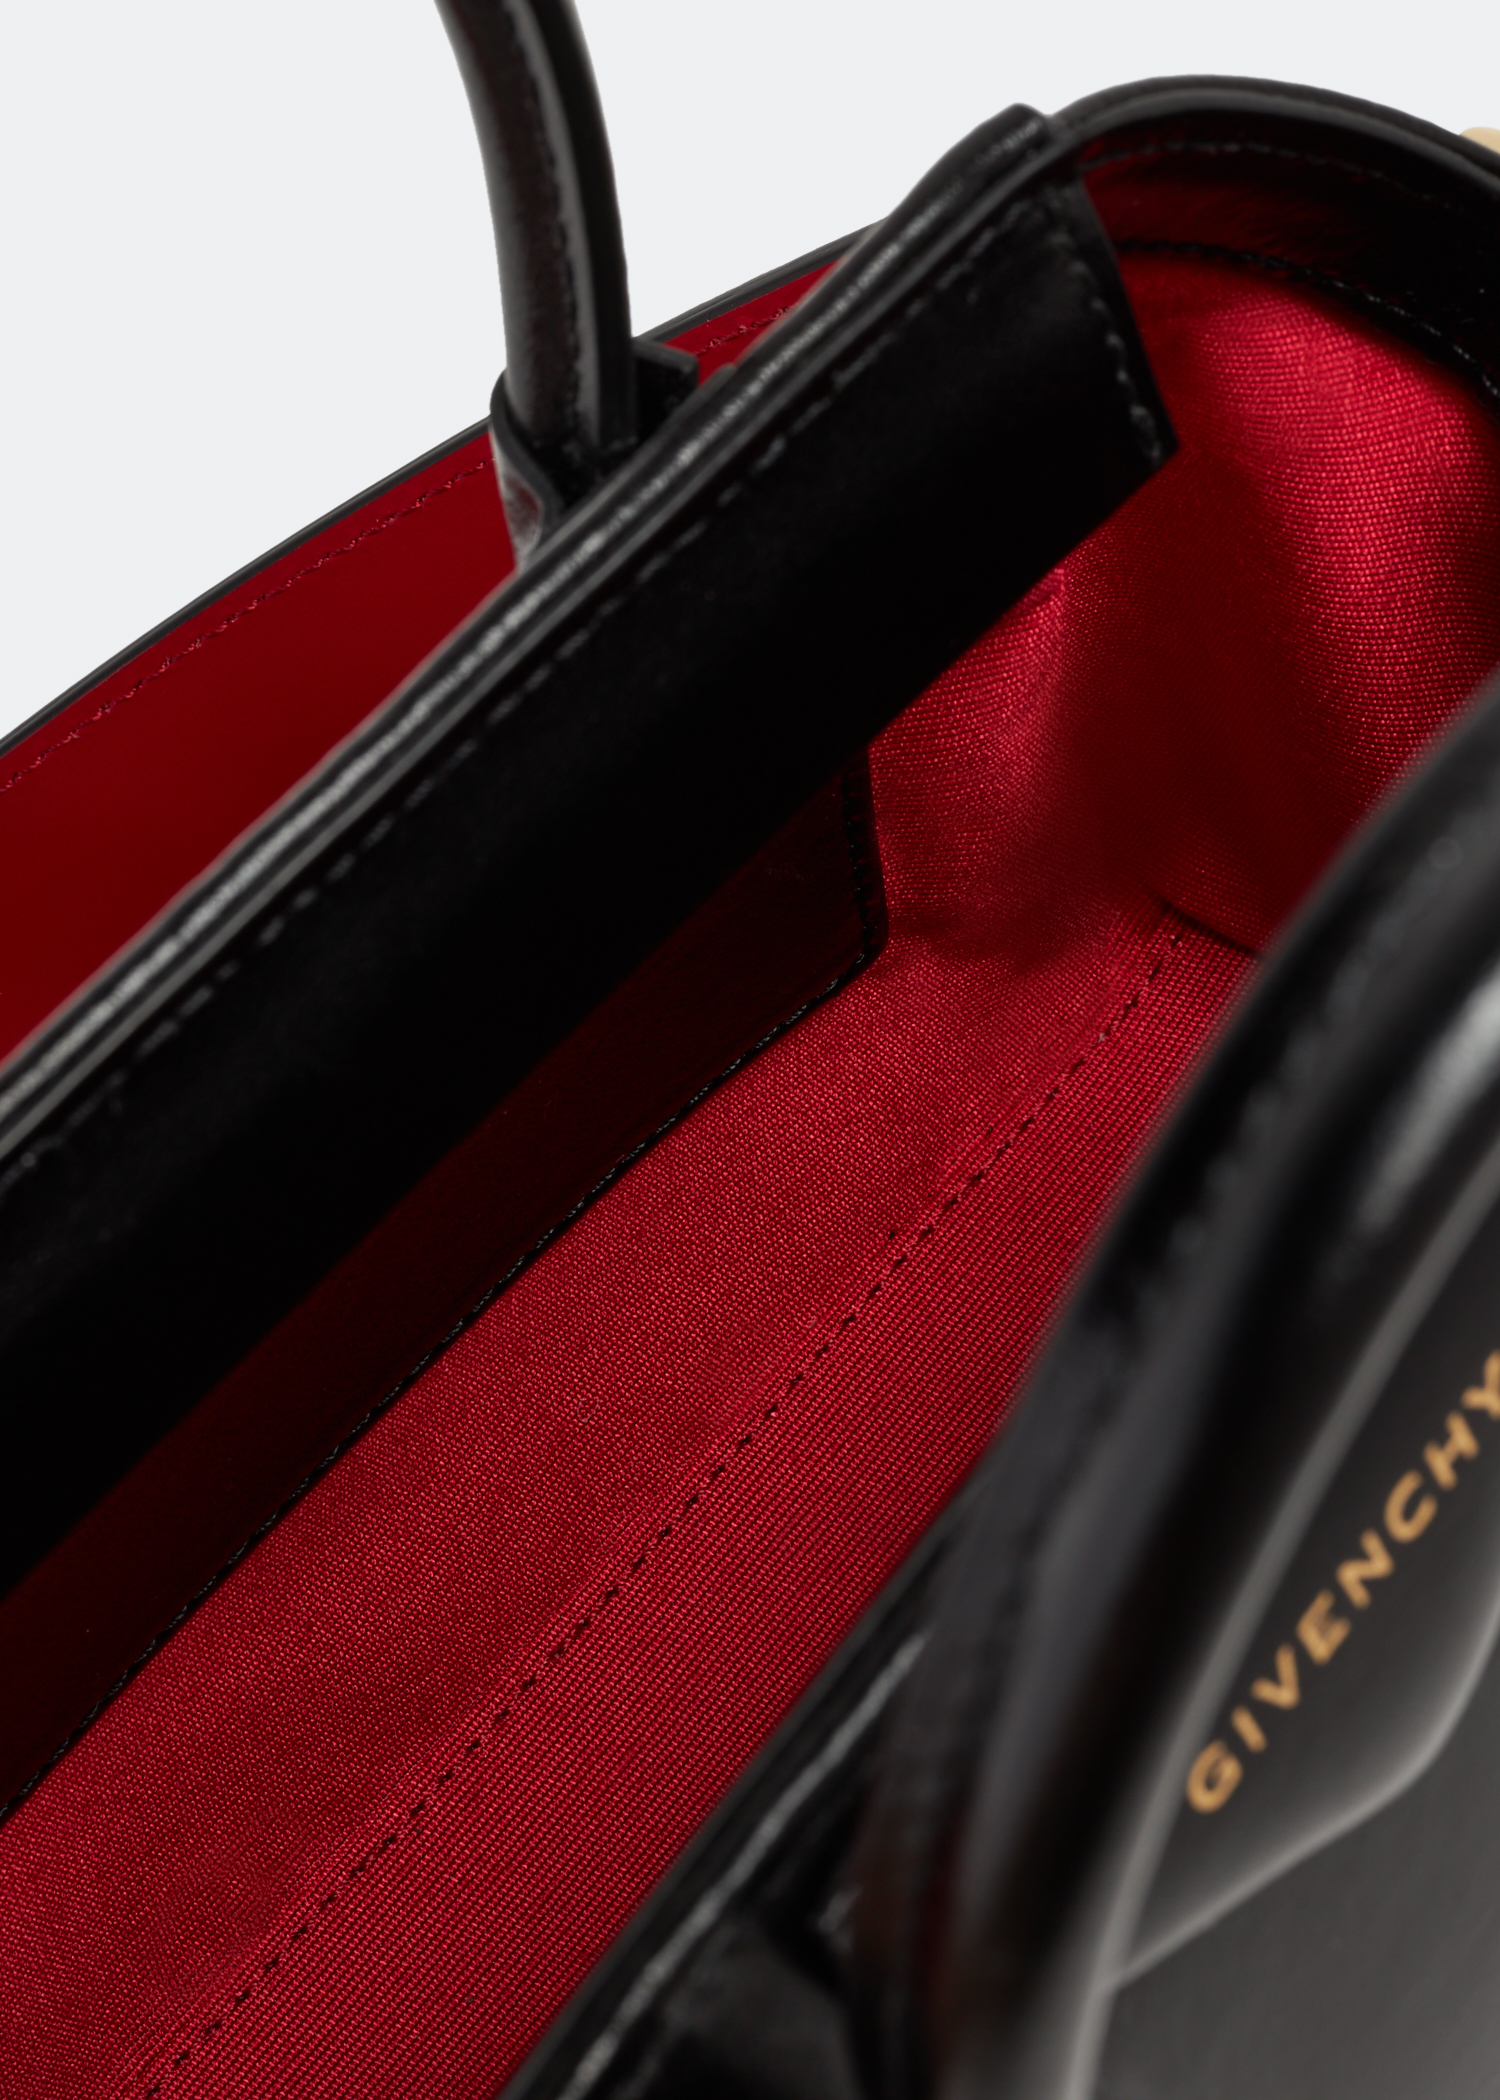 Givenchy Micro Antigona bag for Women - Black in UAE